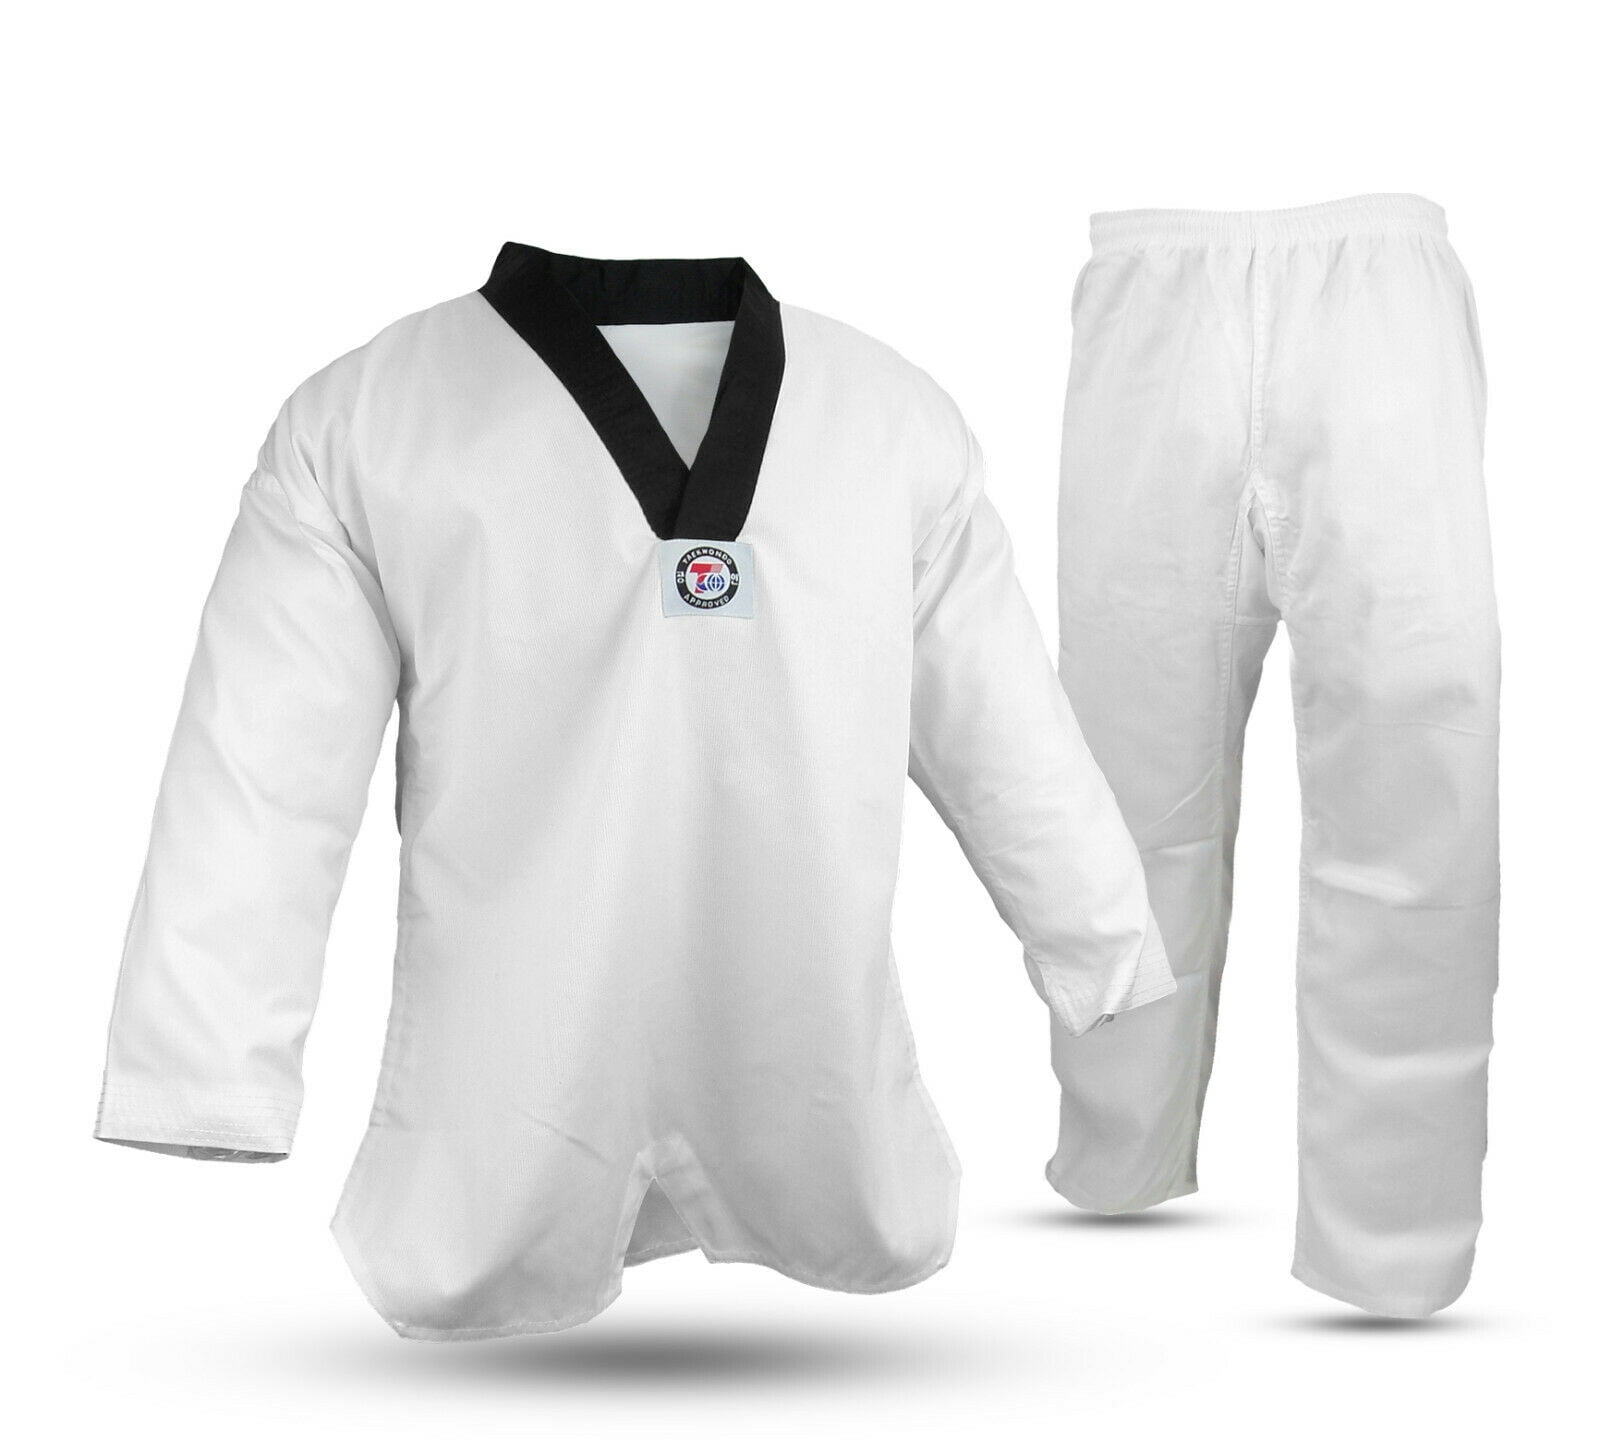 ProForce Gladiator Kung Fu Uniform Wushu Gi White or Black Button 